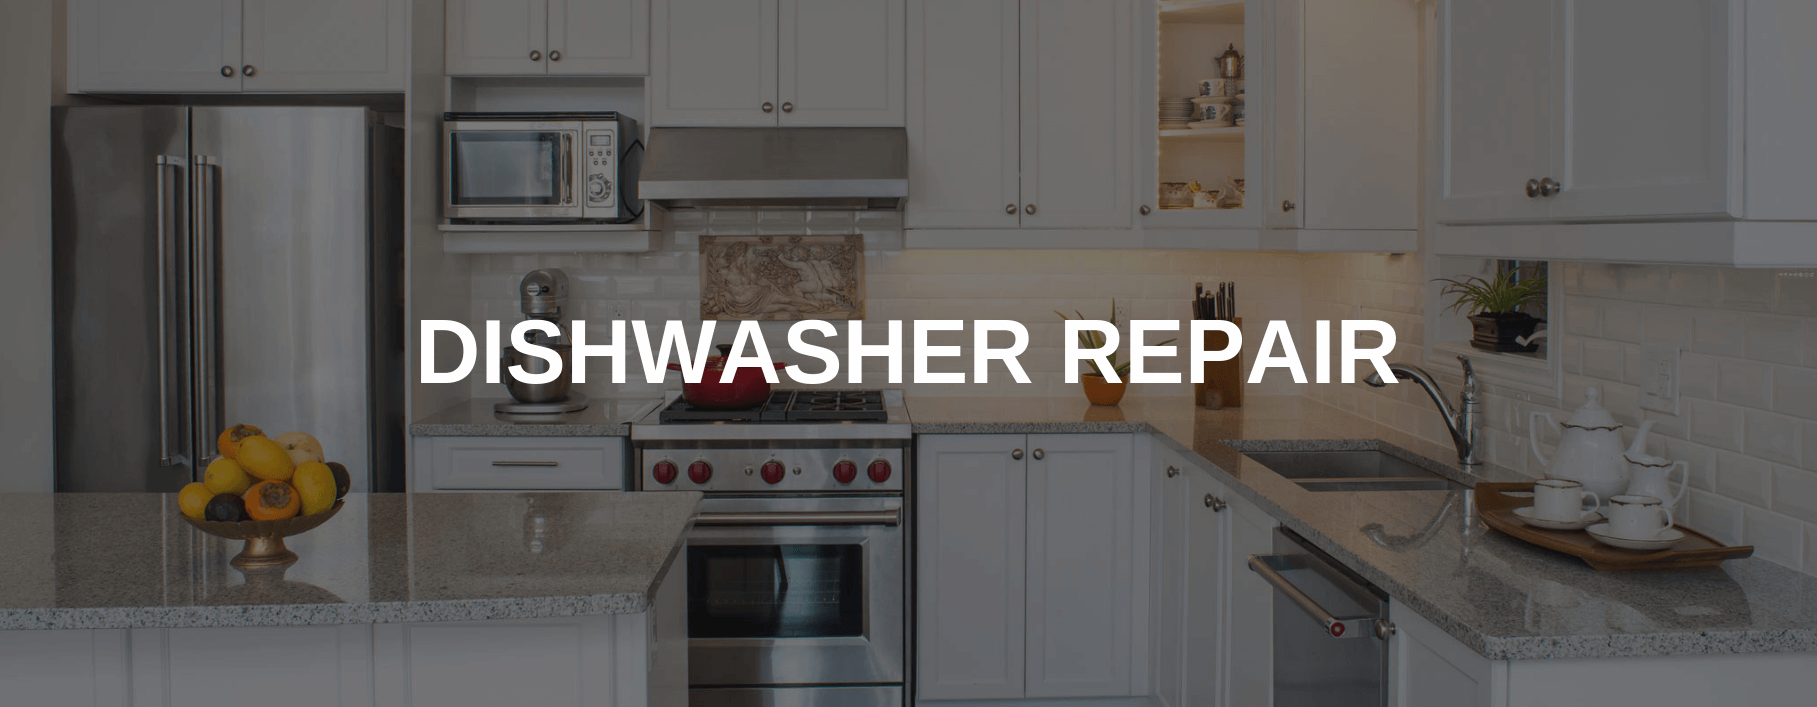 dishwasher repair st louis